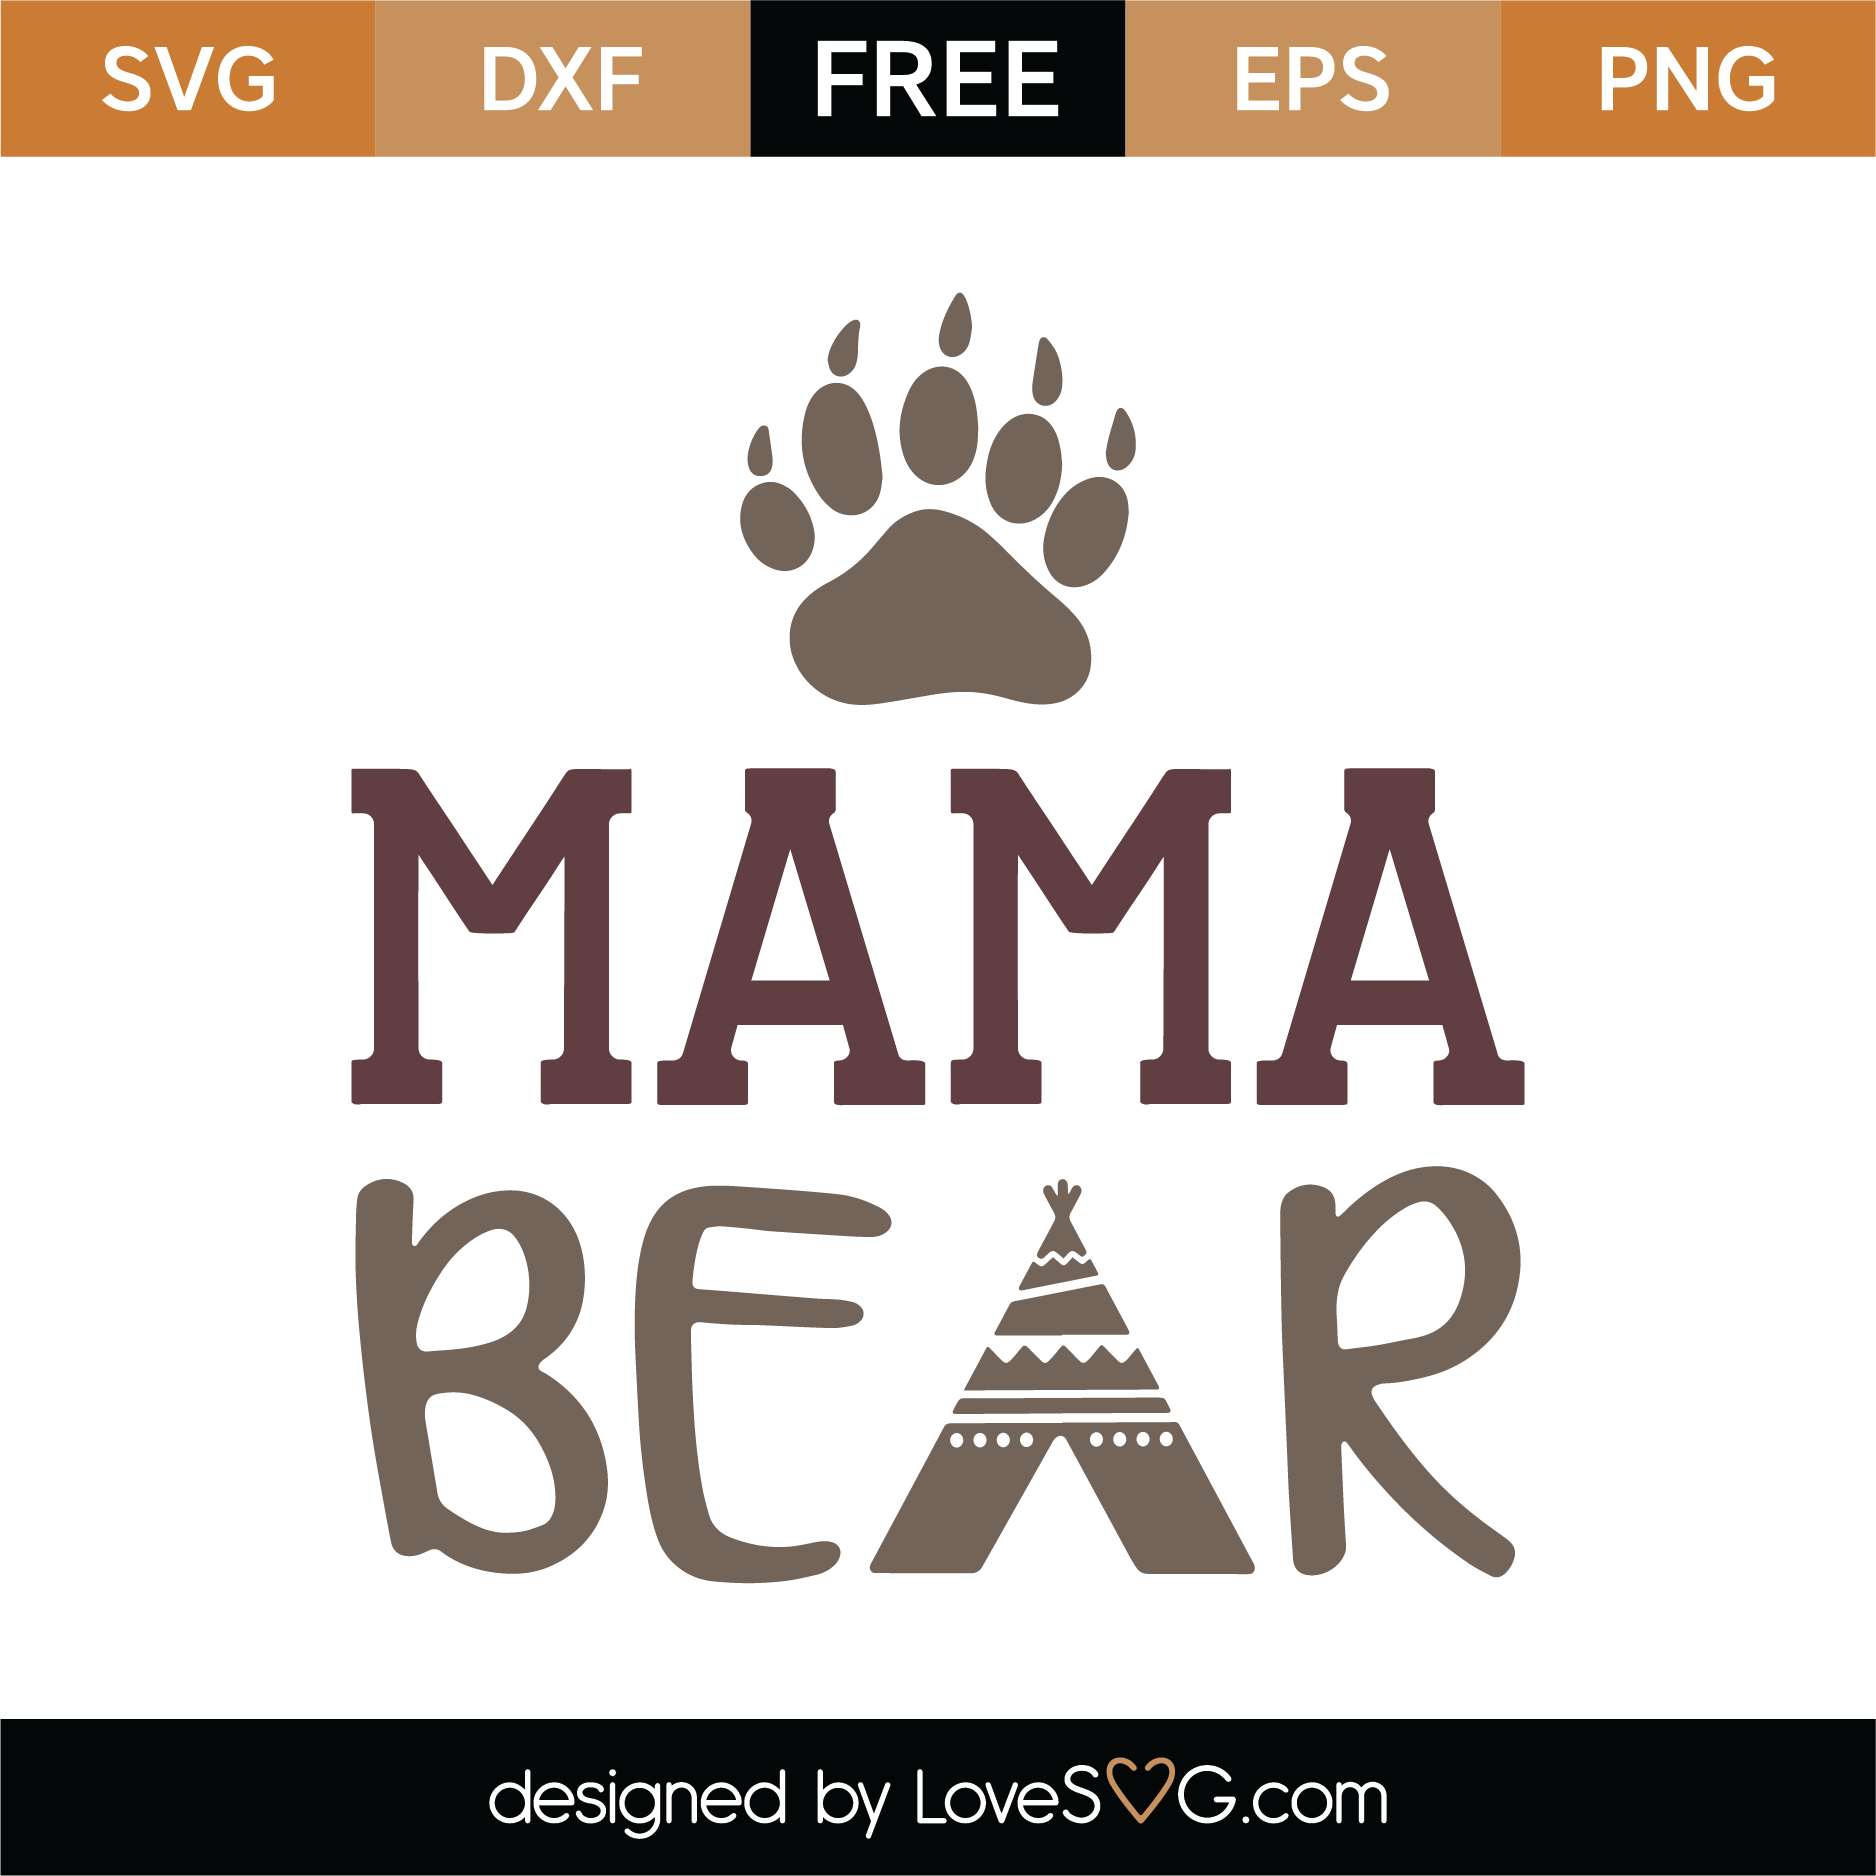 Download Free Mama Bear SVG Cut File | Lovesvg.com